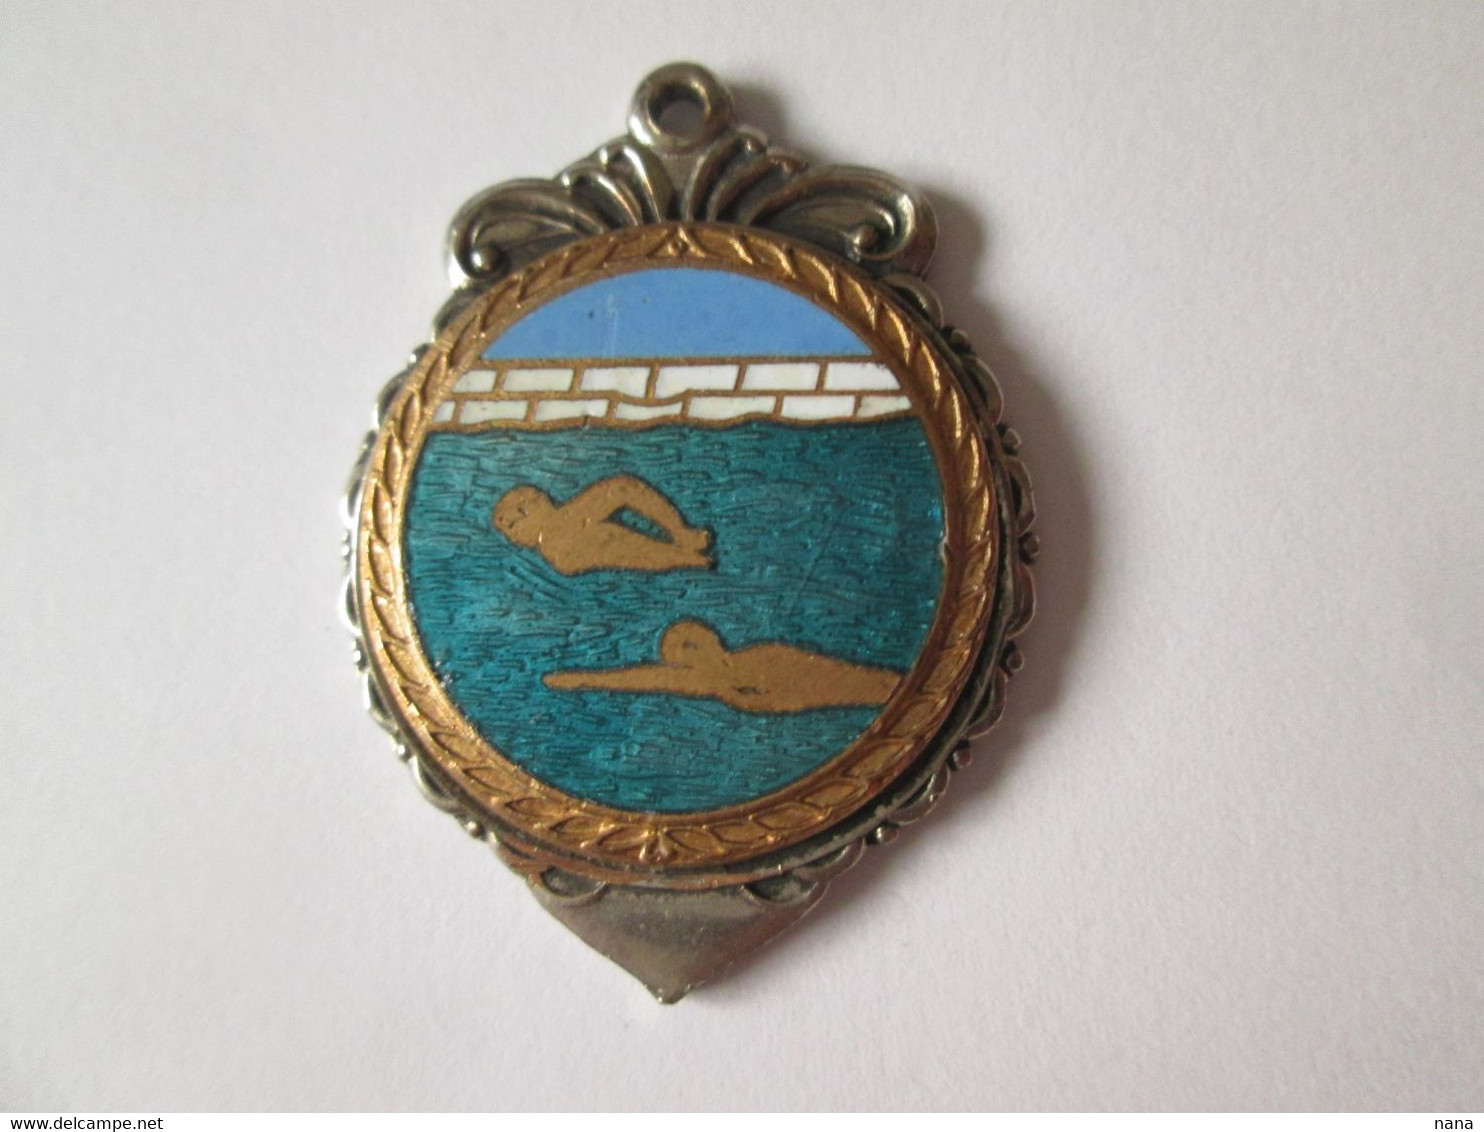 England Swimming Medal/medallion 1950s - Gran Bretaña